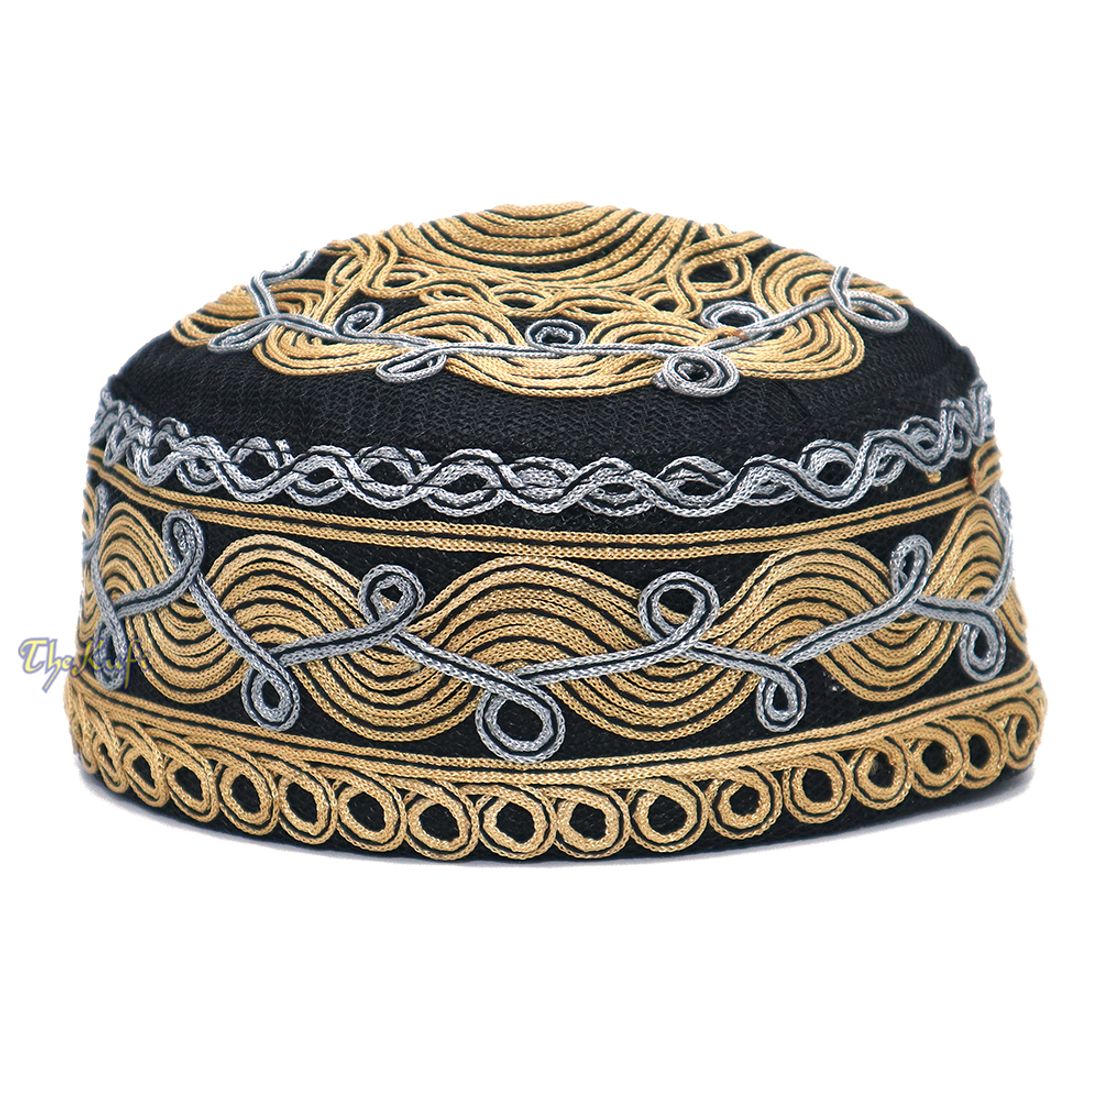 Handcrafted Black Golden Grey Macramé Netting Wave Design Muslim Prayer Hat